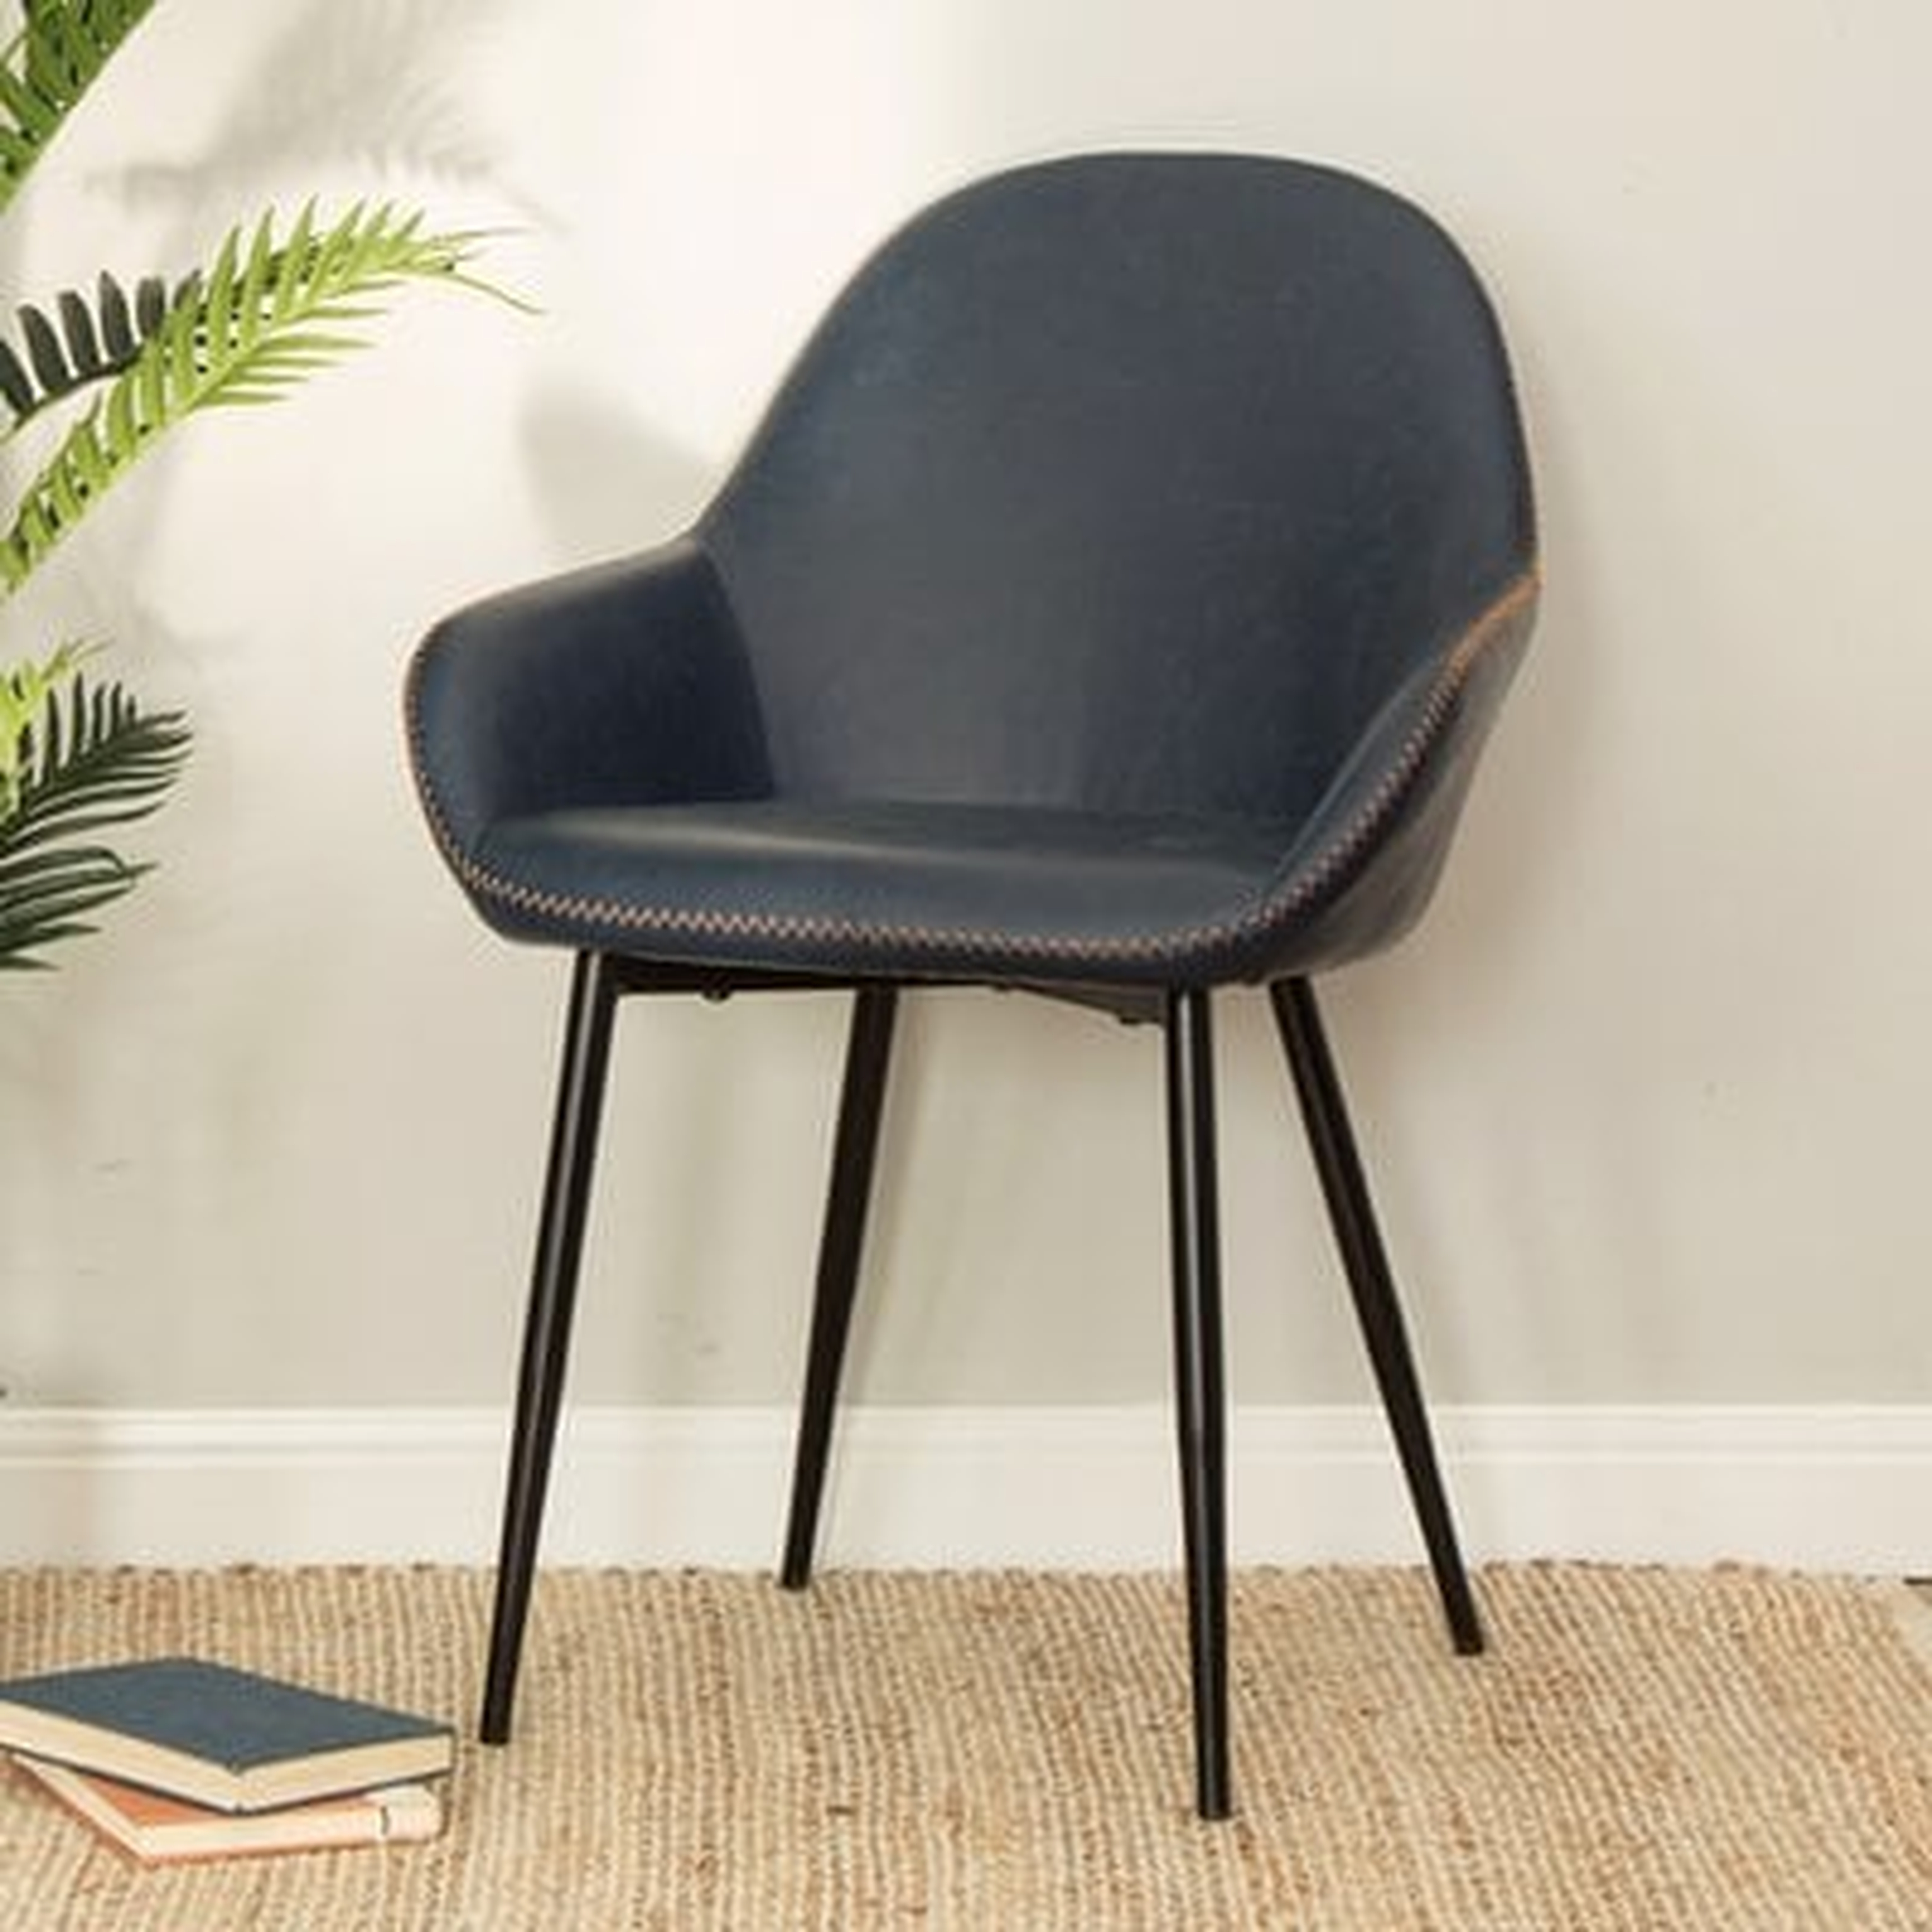 Zosia Mid Century Modern Upholstered Dining Chair (Set of 2) - Wayfair